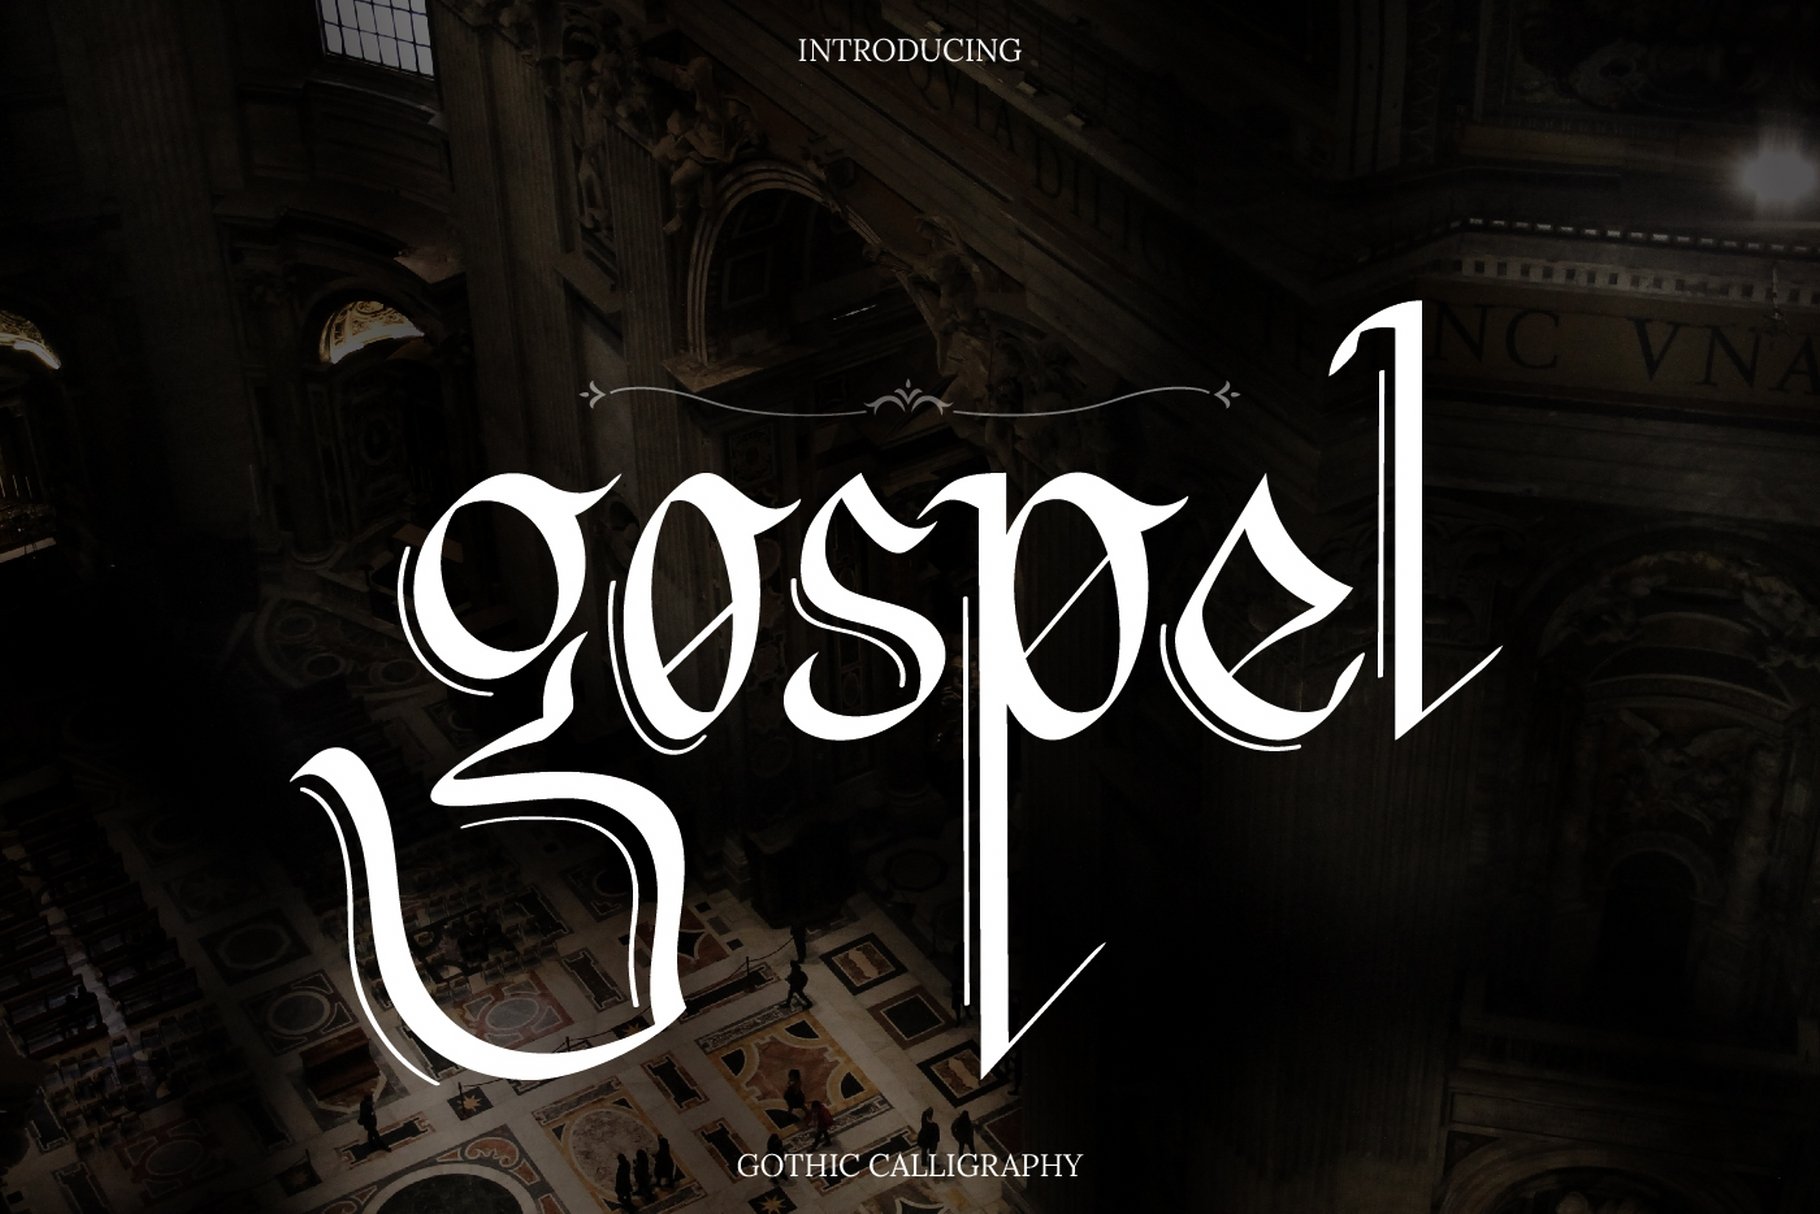 Gospel Gothic Calligraphy cover image.